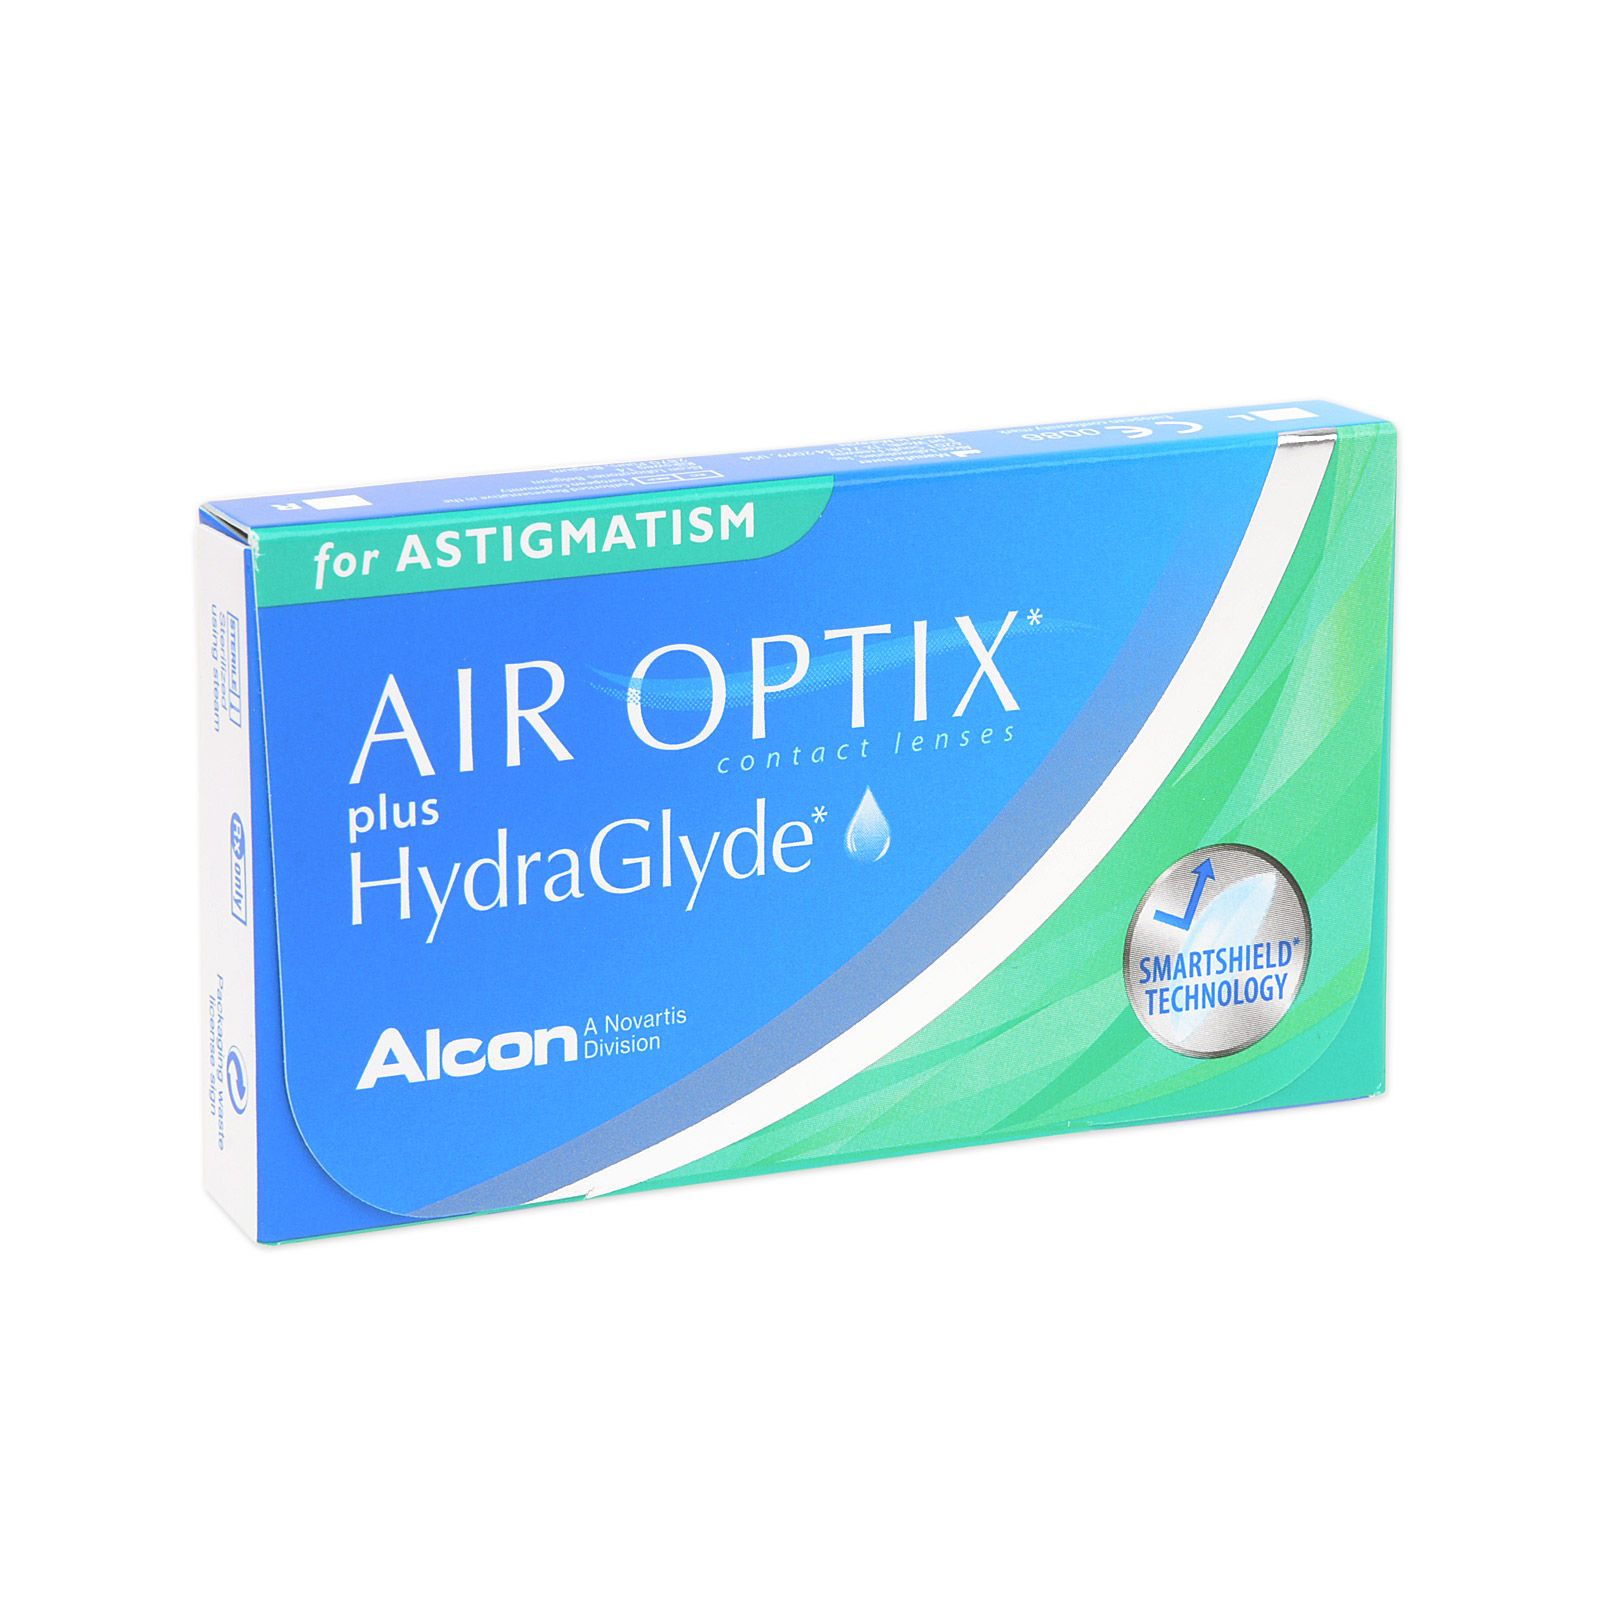 air-optix-plus-hydraglyde-for-astigmatism-air-optix-alcon